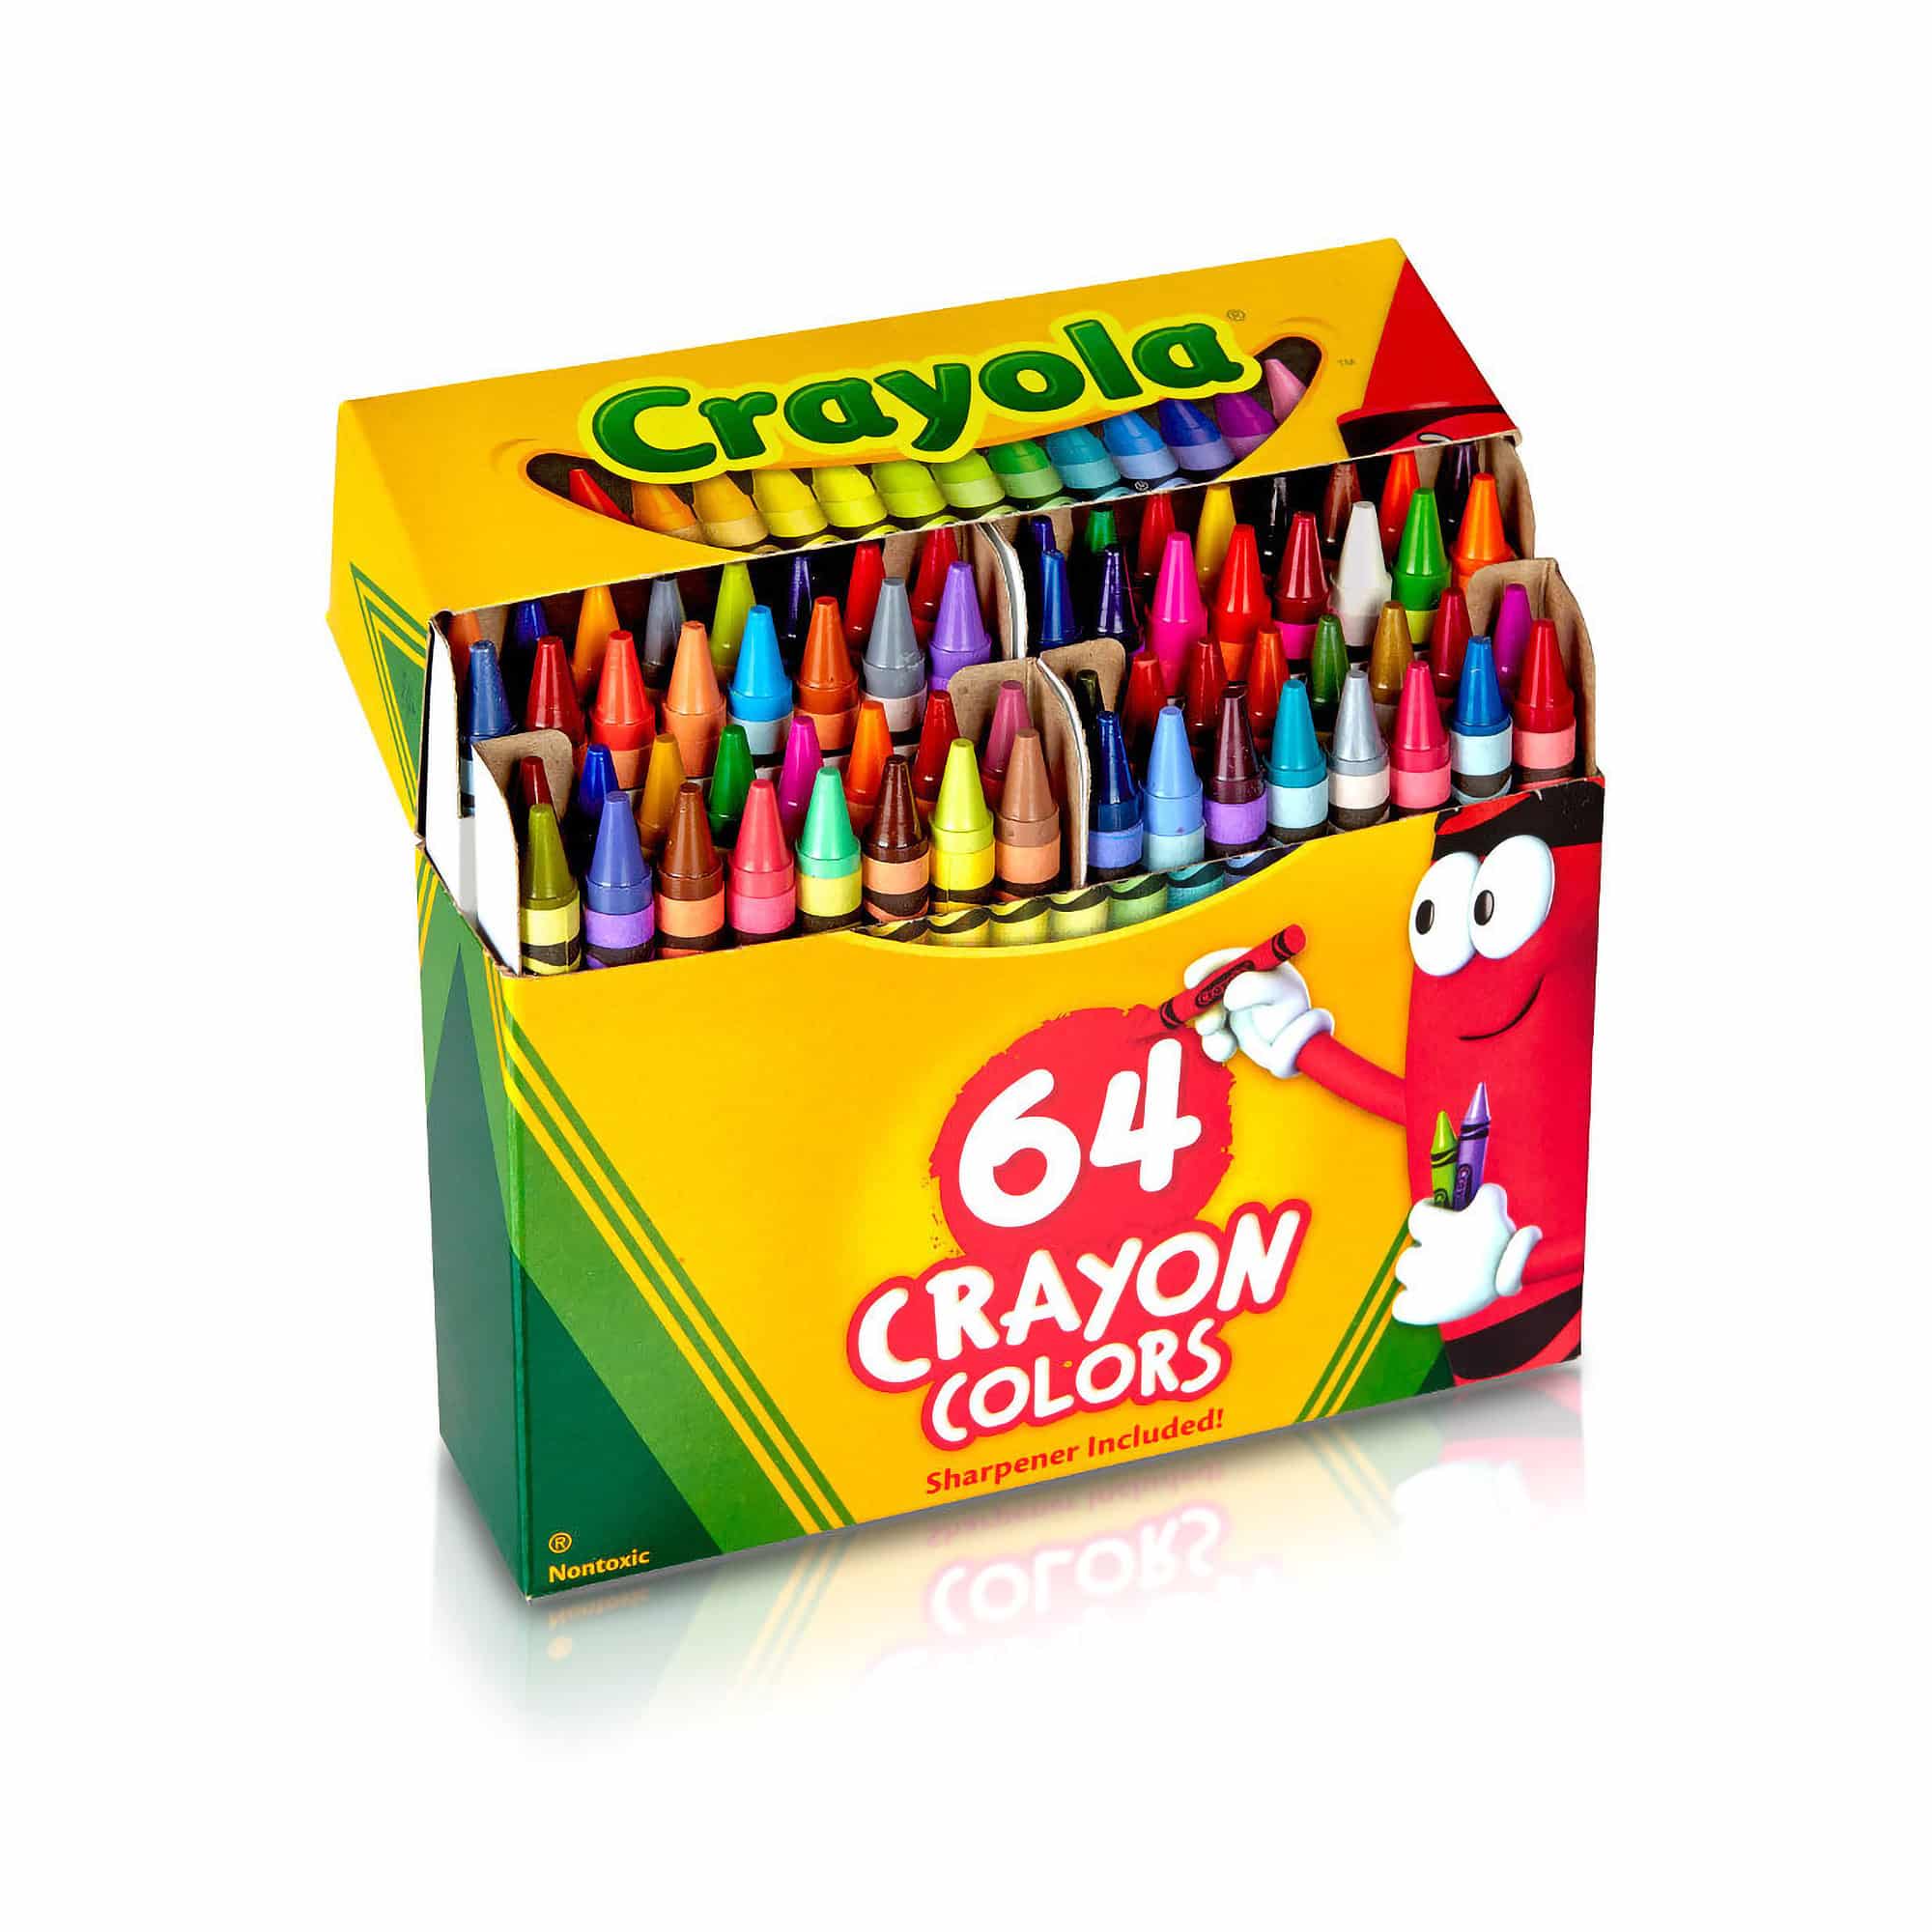 Crayola Crayons - 64 Pack